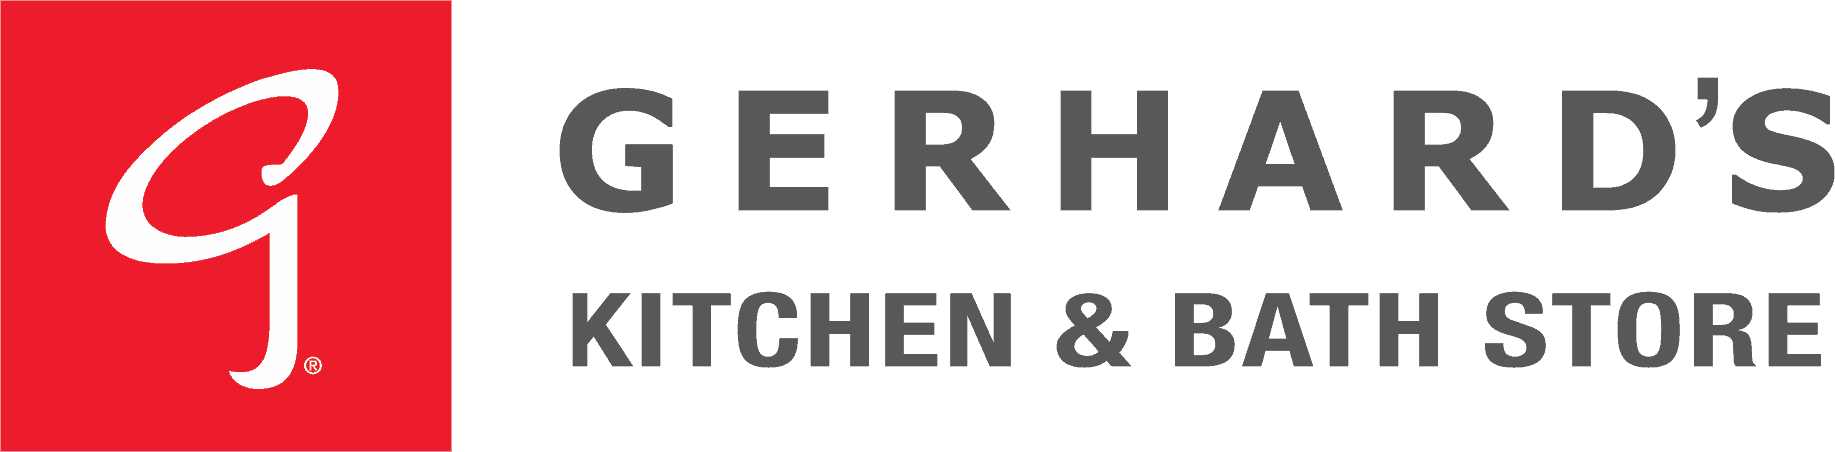 Gerhard's Kitchen and Bath Store partner logo.